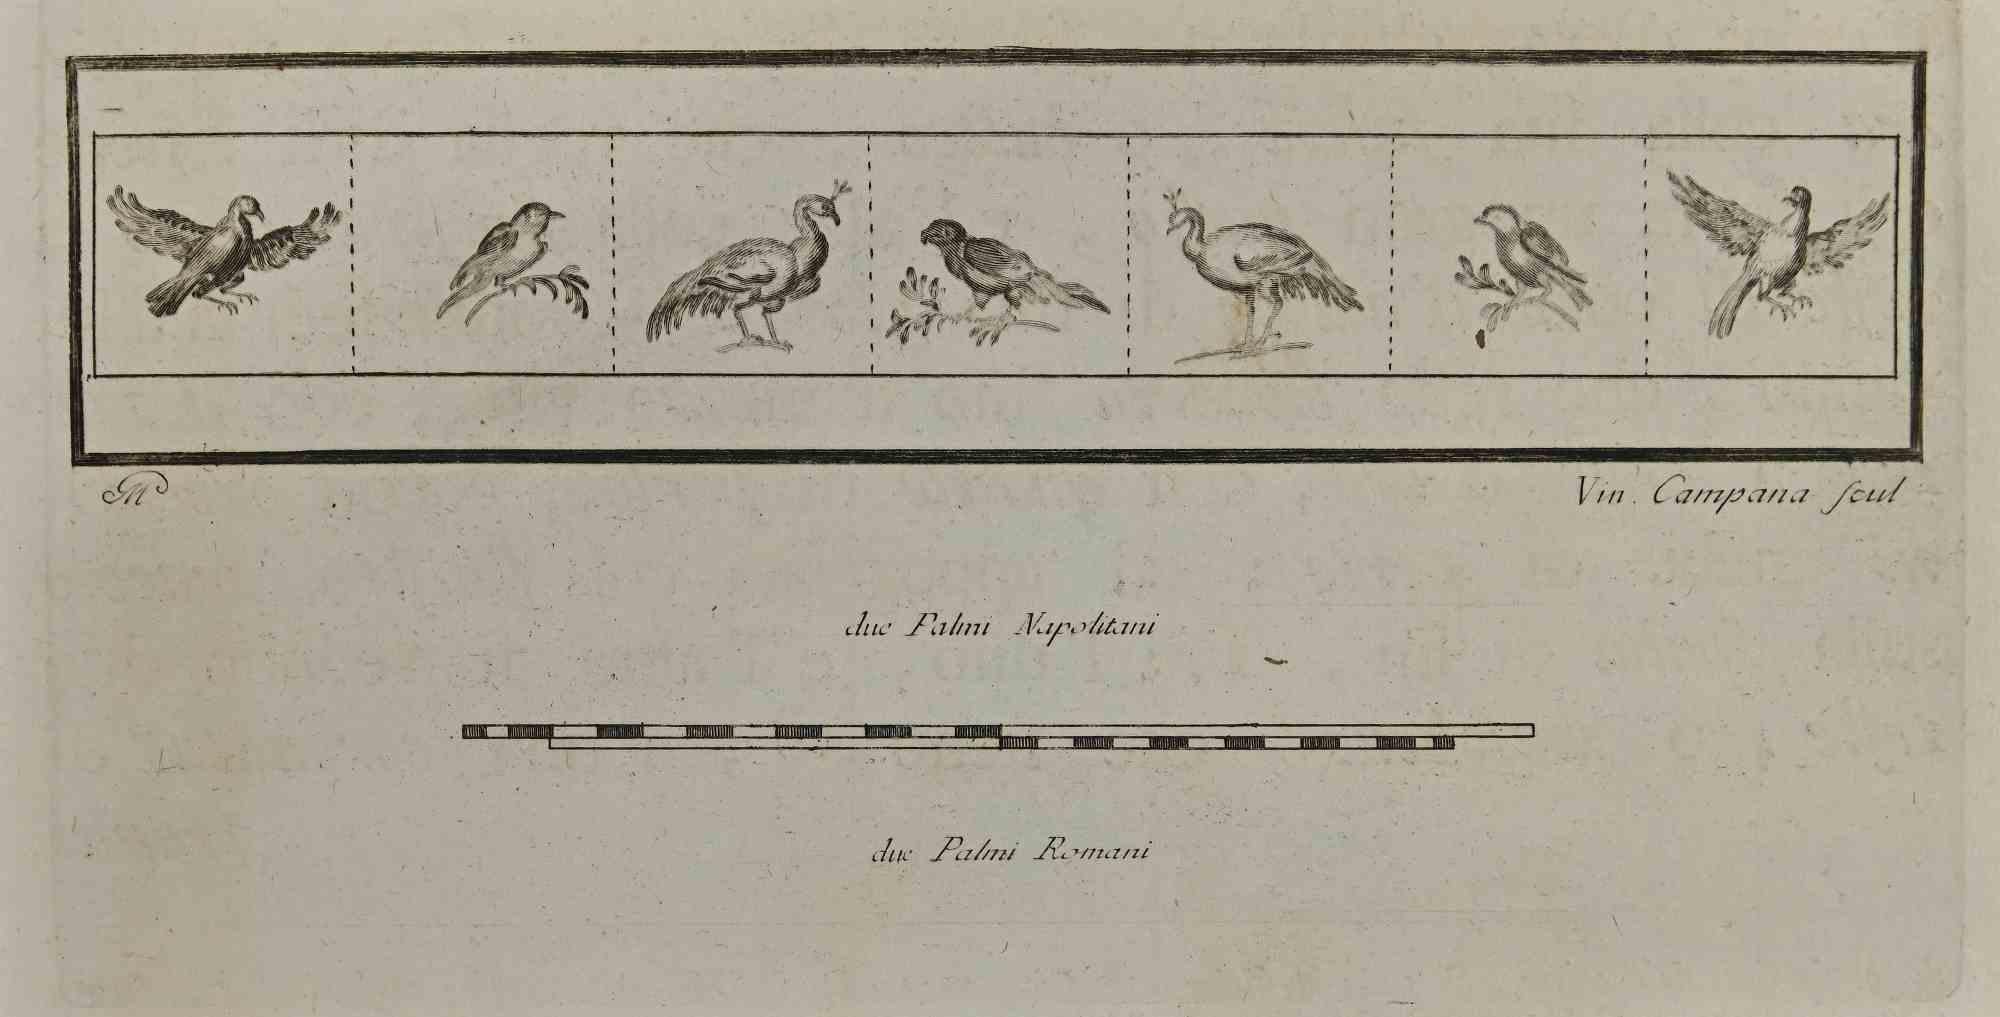 Vincenzo Campana Figurative Print - Birds from Herculaneum - Etching by V. Campana - 18th Century